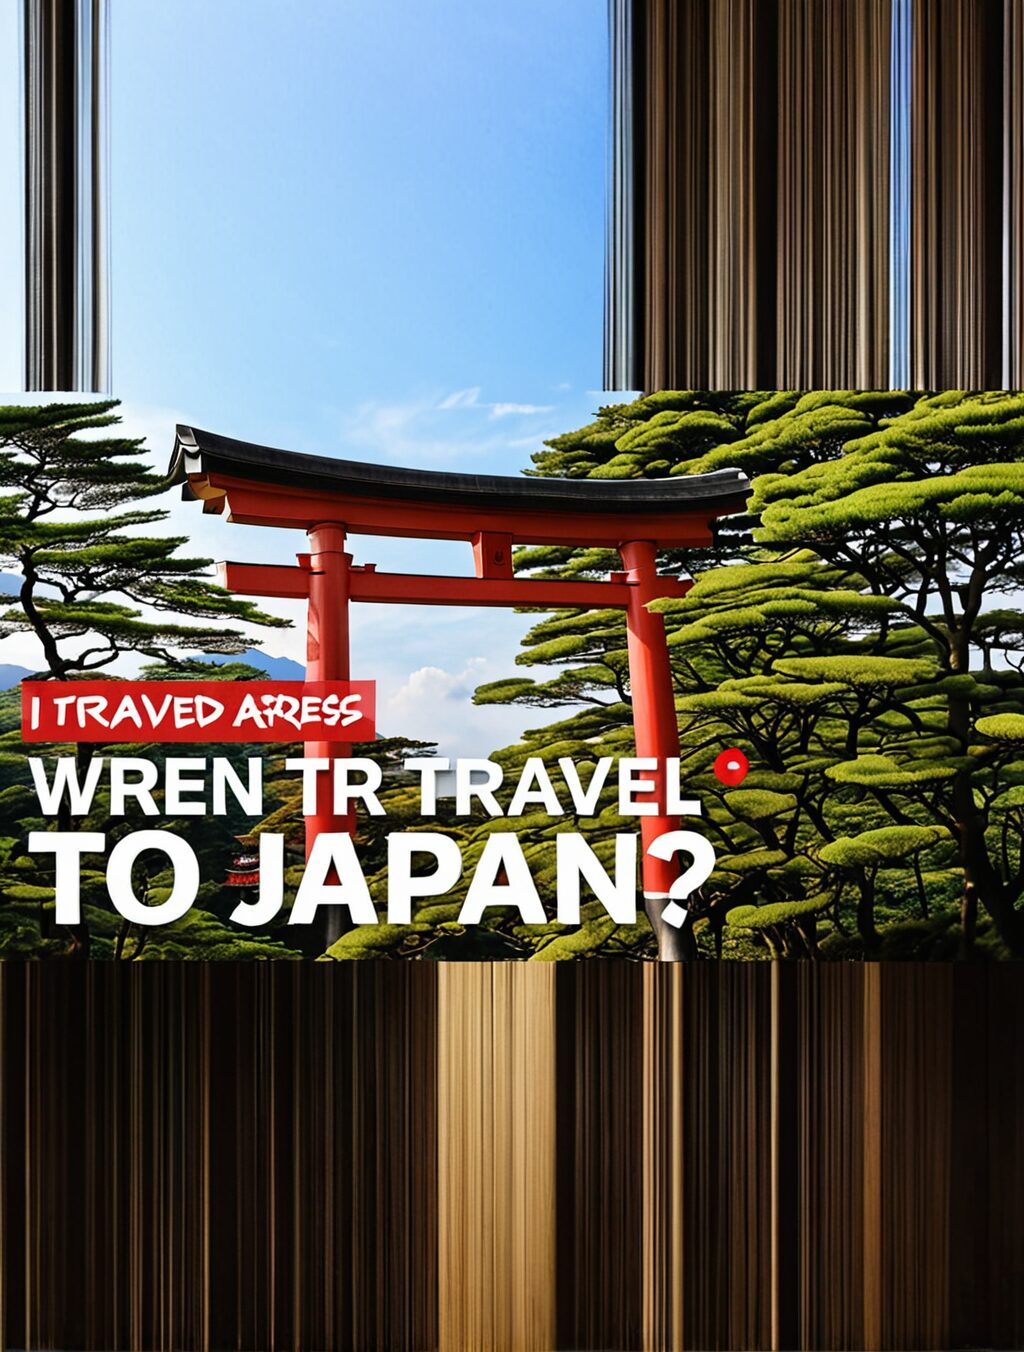 「i traveled across japan for free」